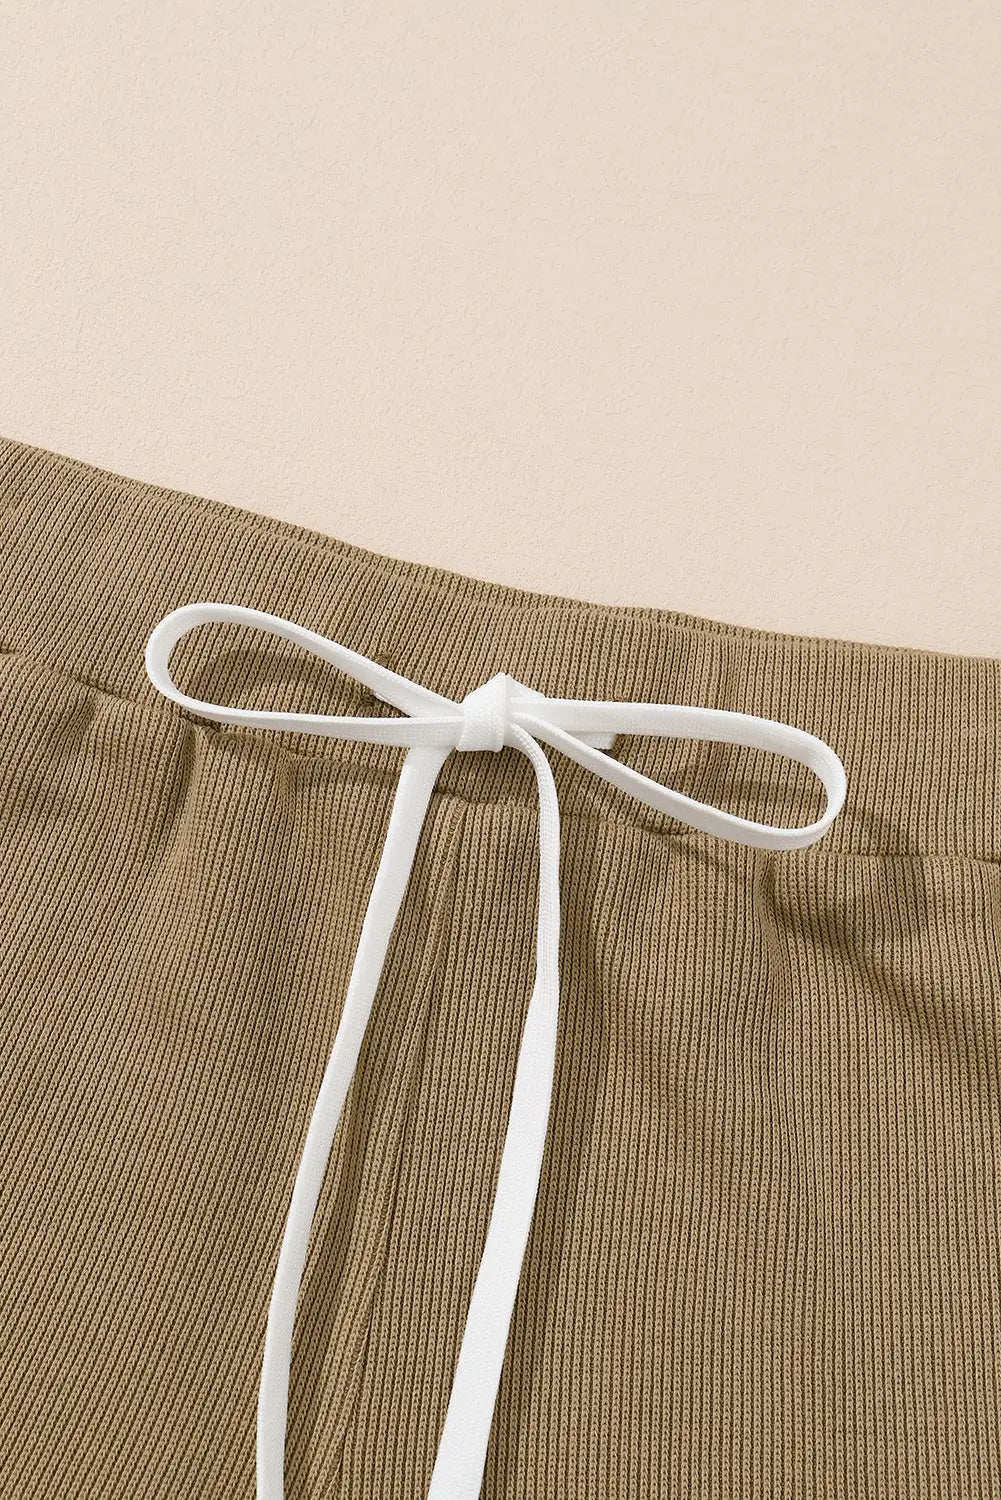 Khaki exposed seam textured long sleeve top shorts set - loungewear